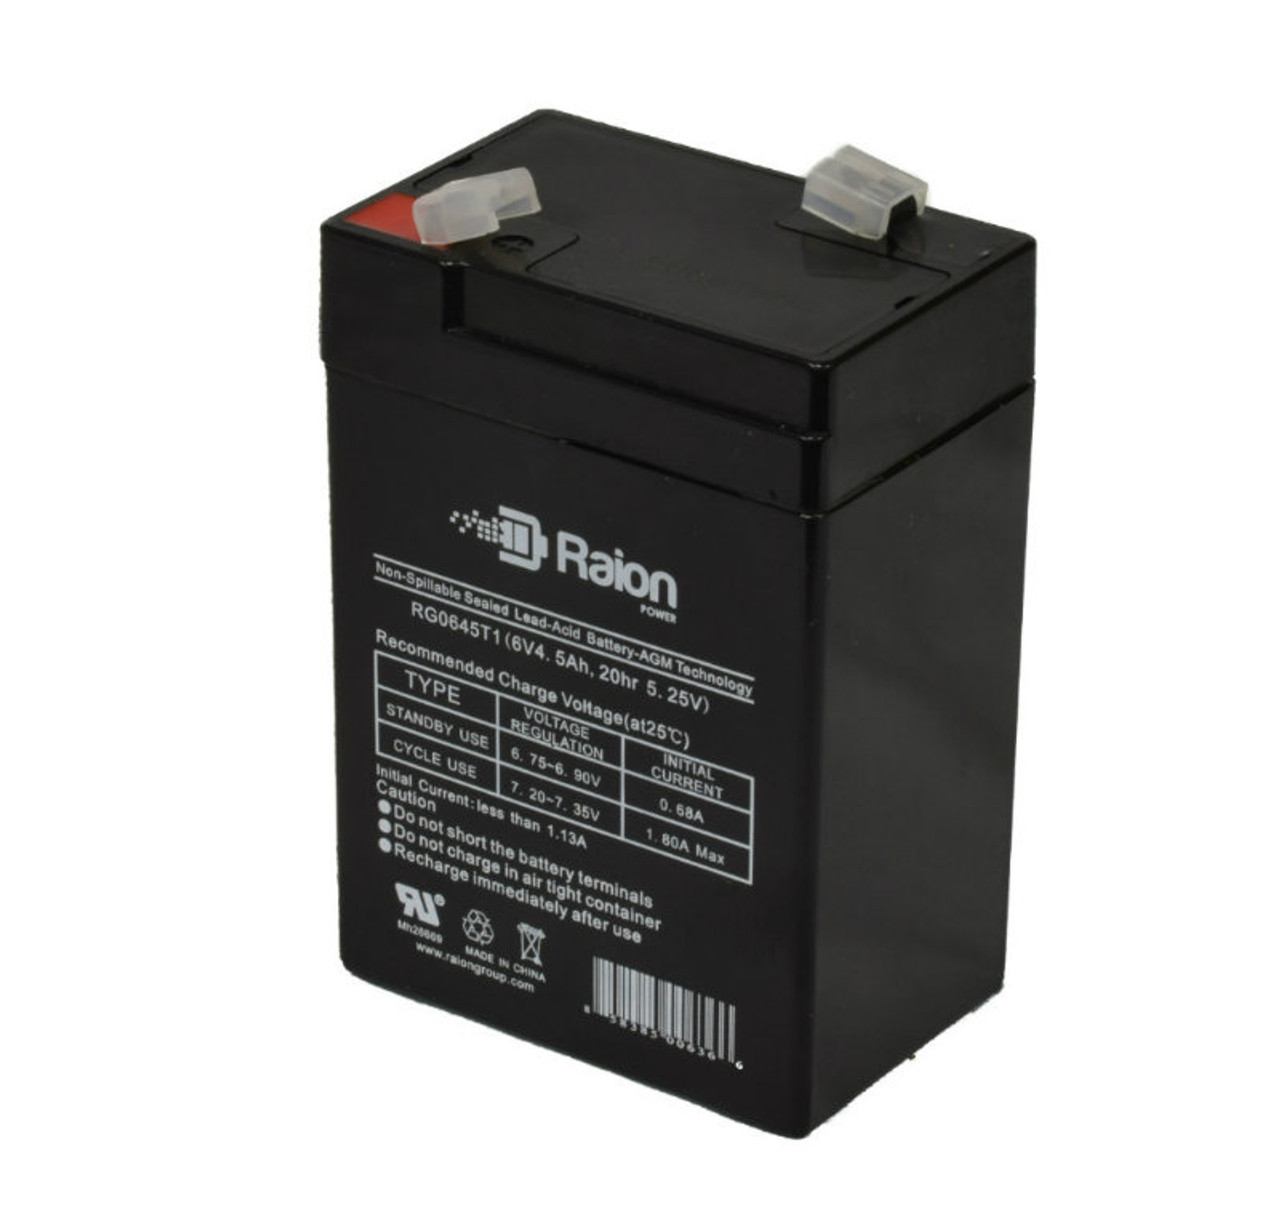 Raion Power RG0645T1 6V 4.5Ah Replacement Battery Cartridge for B&B BP4-6